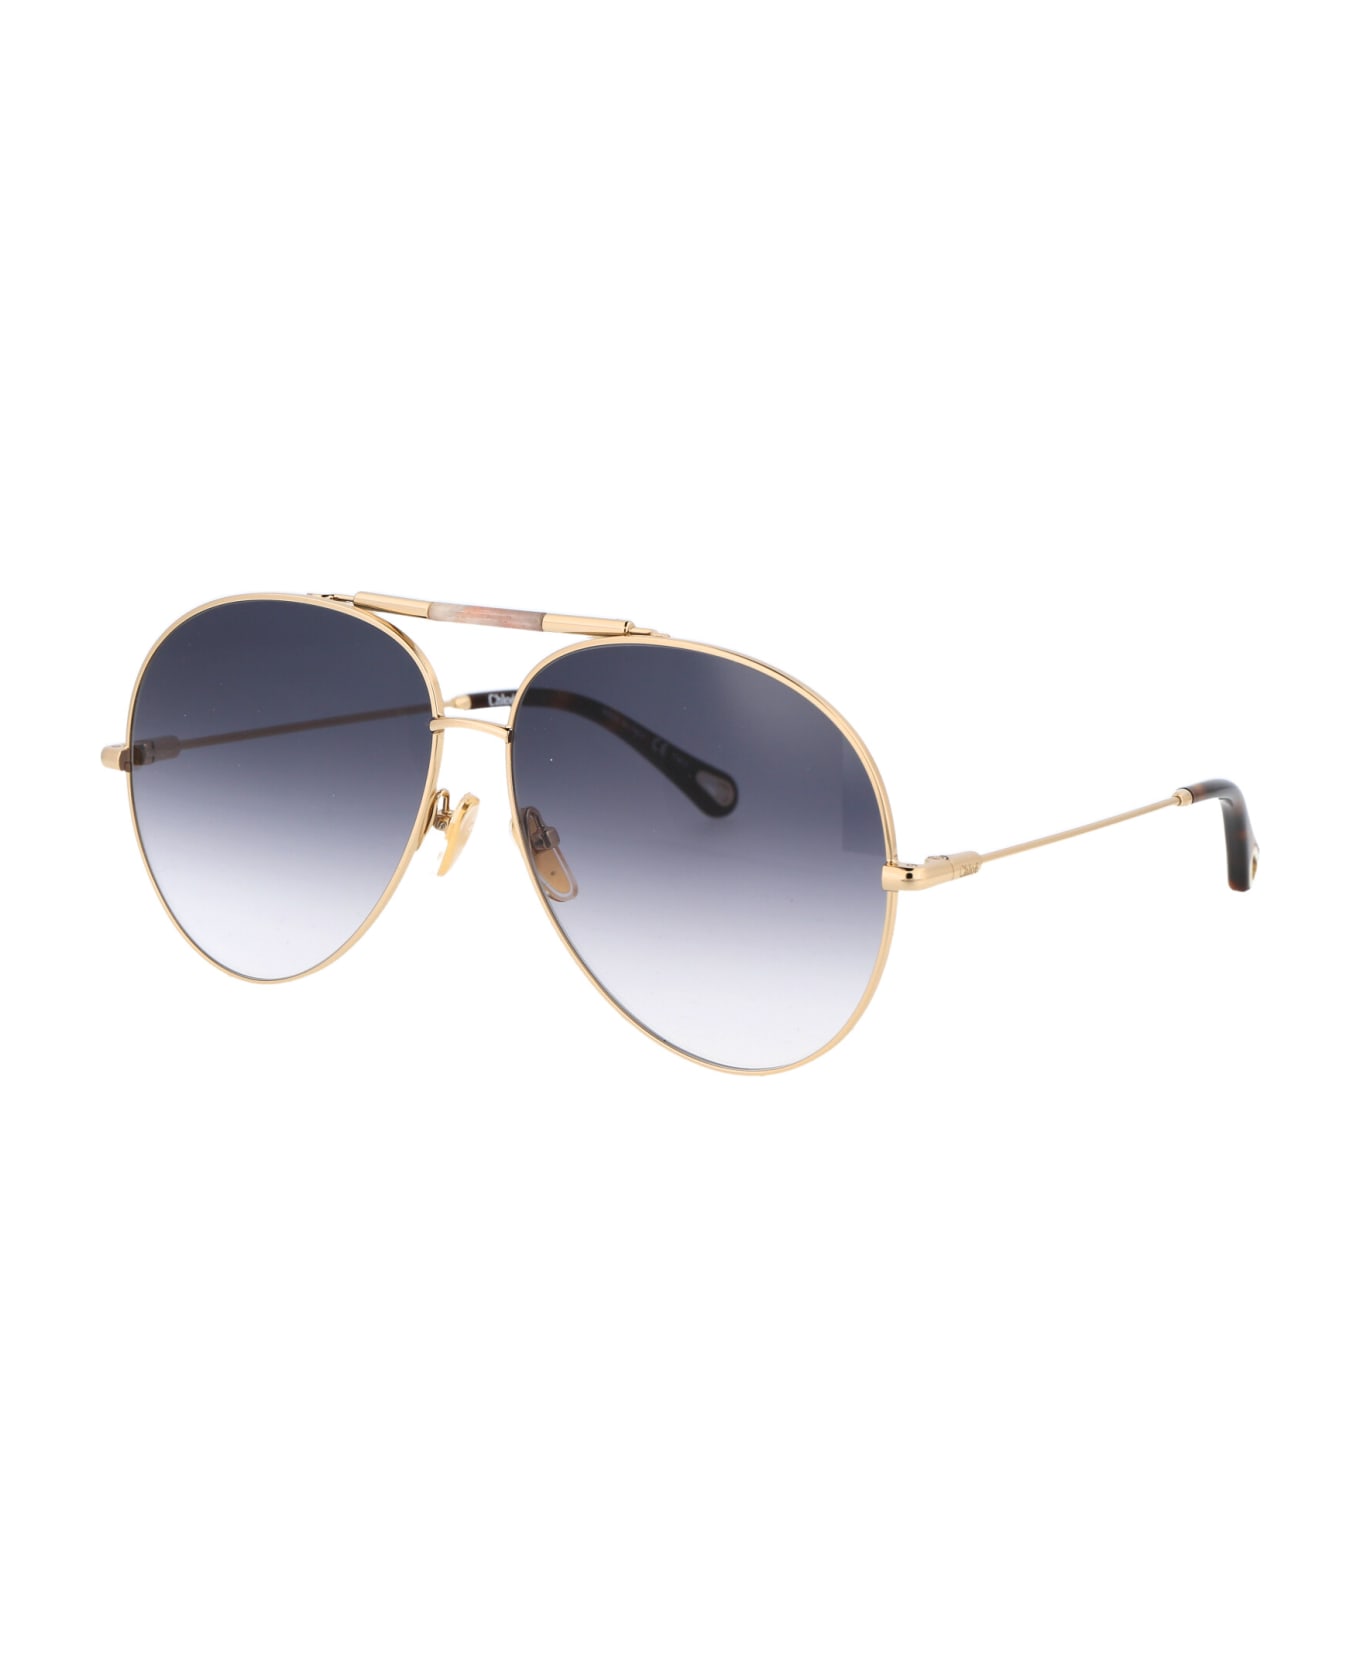 Chloé Eyewear Ch0113s Sunglasses - 001 GOLD GOLD BLUE